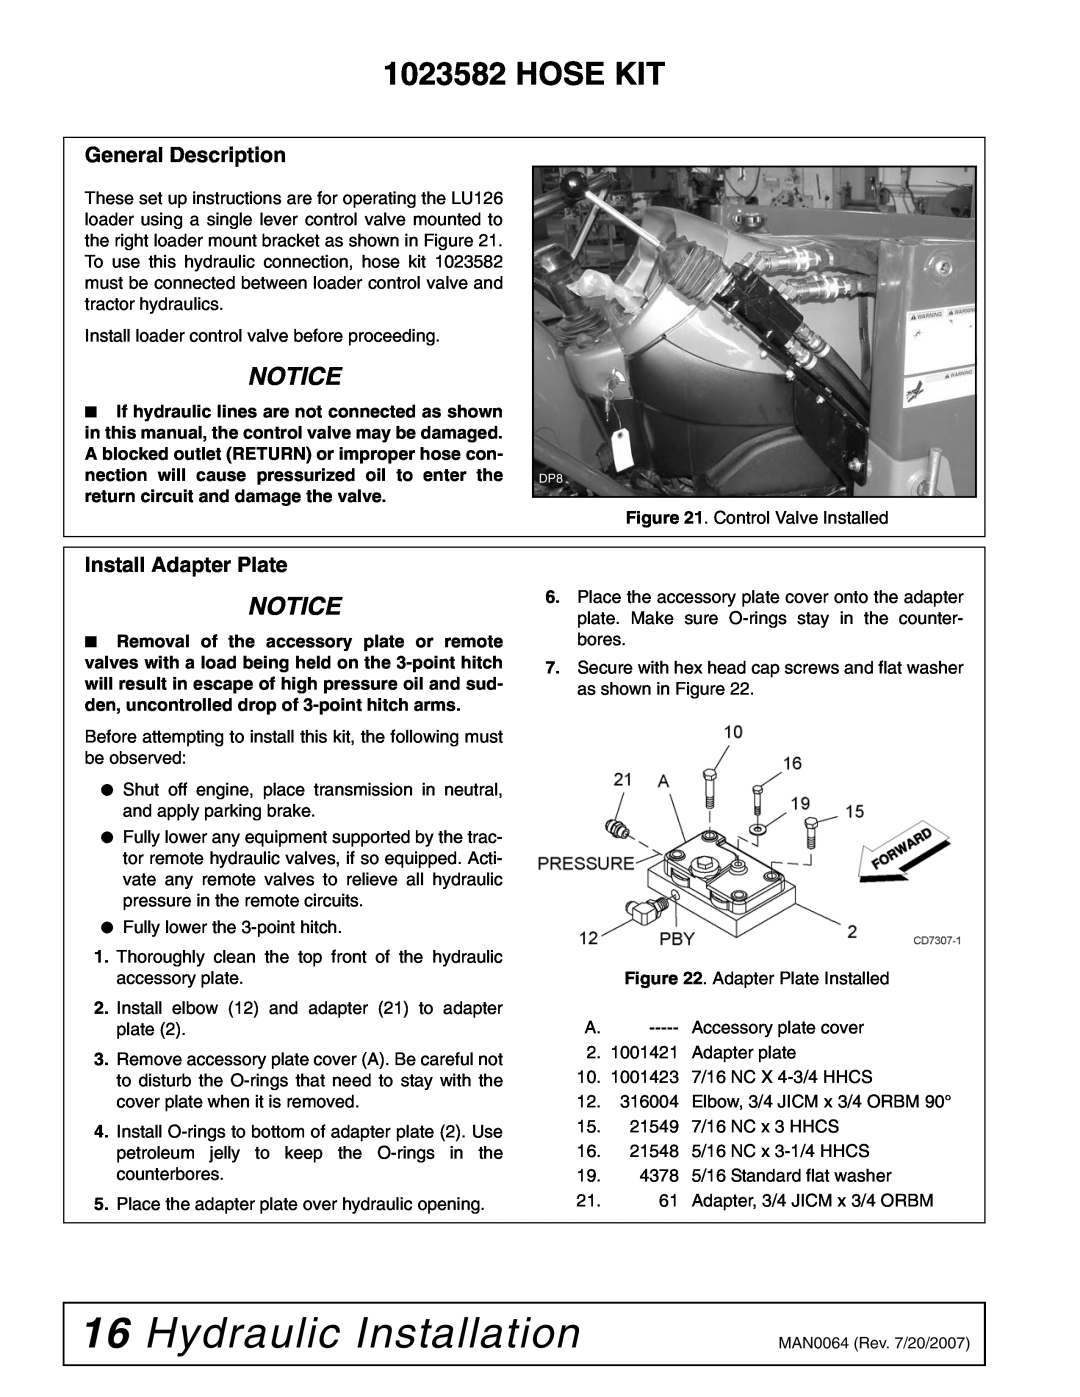 Woods Equipment 111877 manual Hydraulic Installation, Hose Kit, Notice, General Description, Install Adapter Plate 